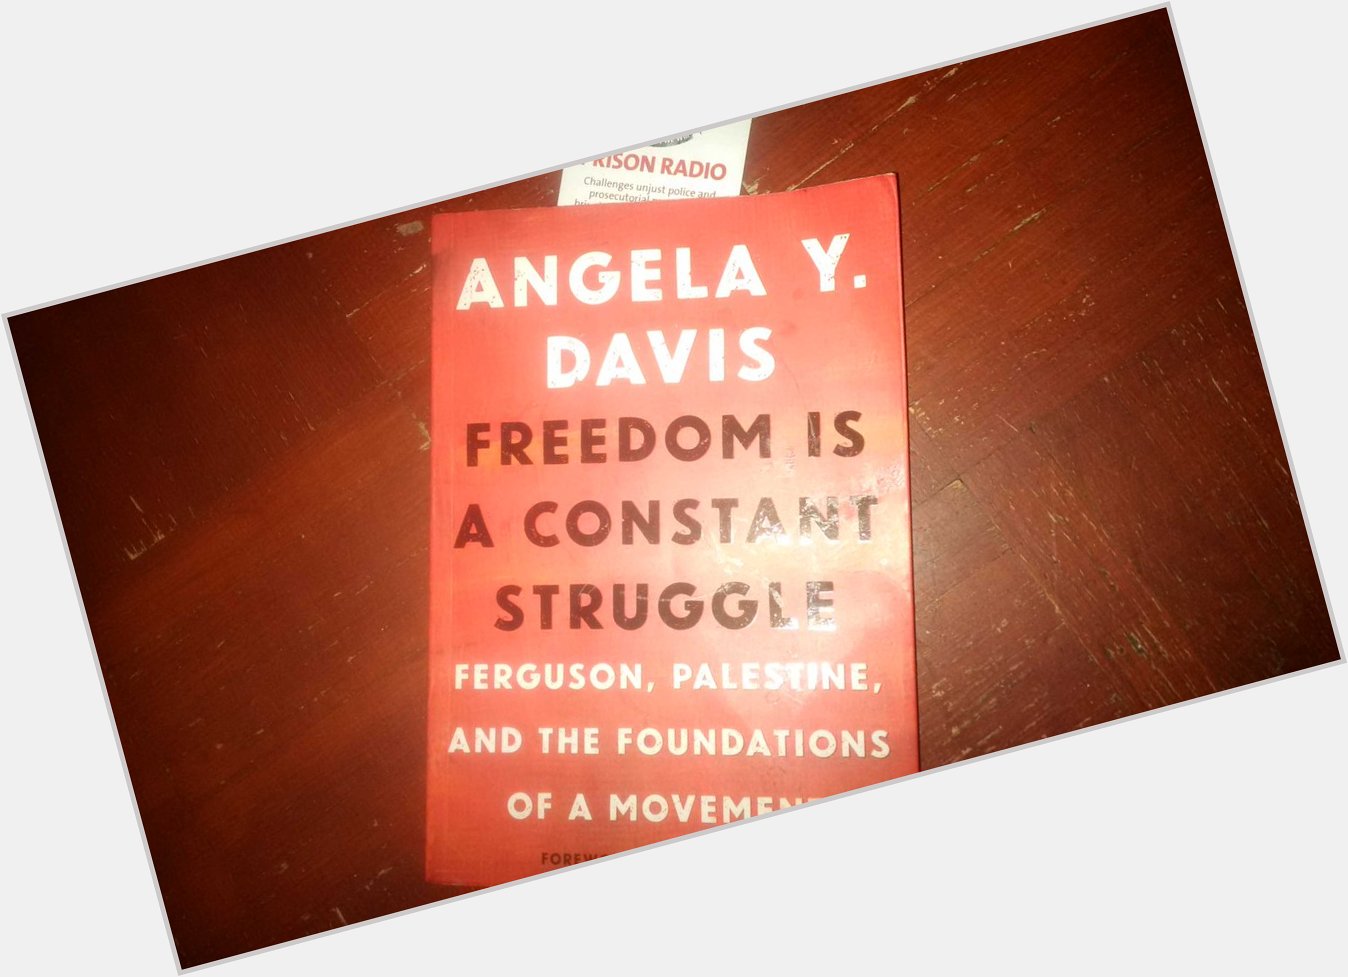 Brilliant analysis and discussion. Happy Birthday, Angela Davis! 